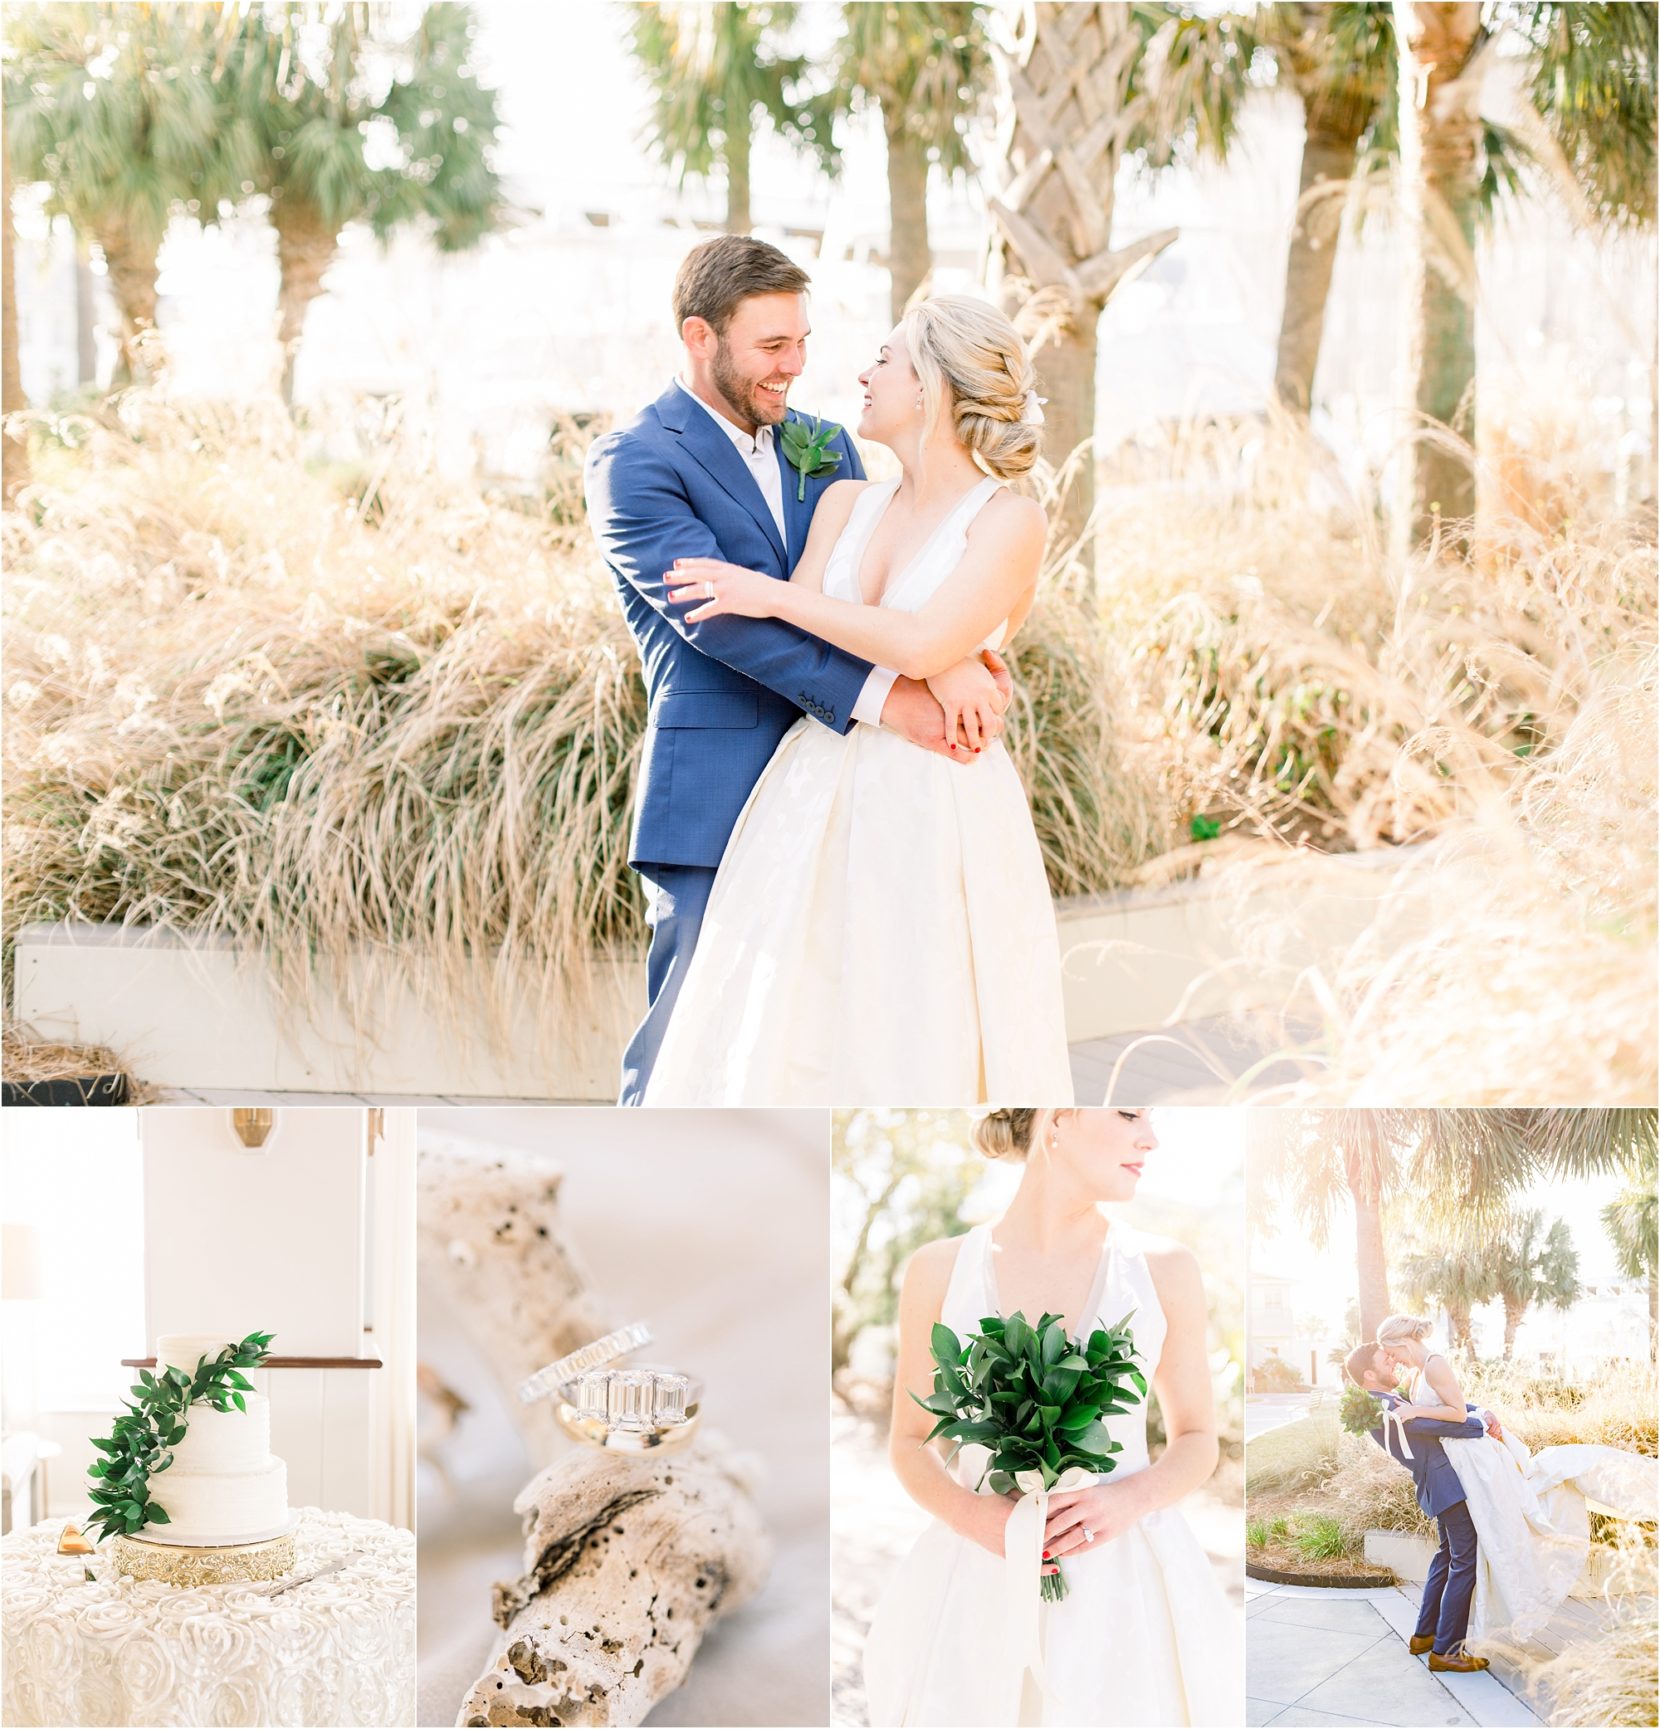 Fishers Orange Beach Alabama Wedding By Jennie Tewell Photography